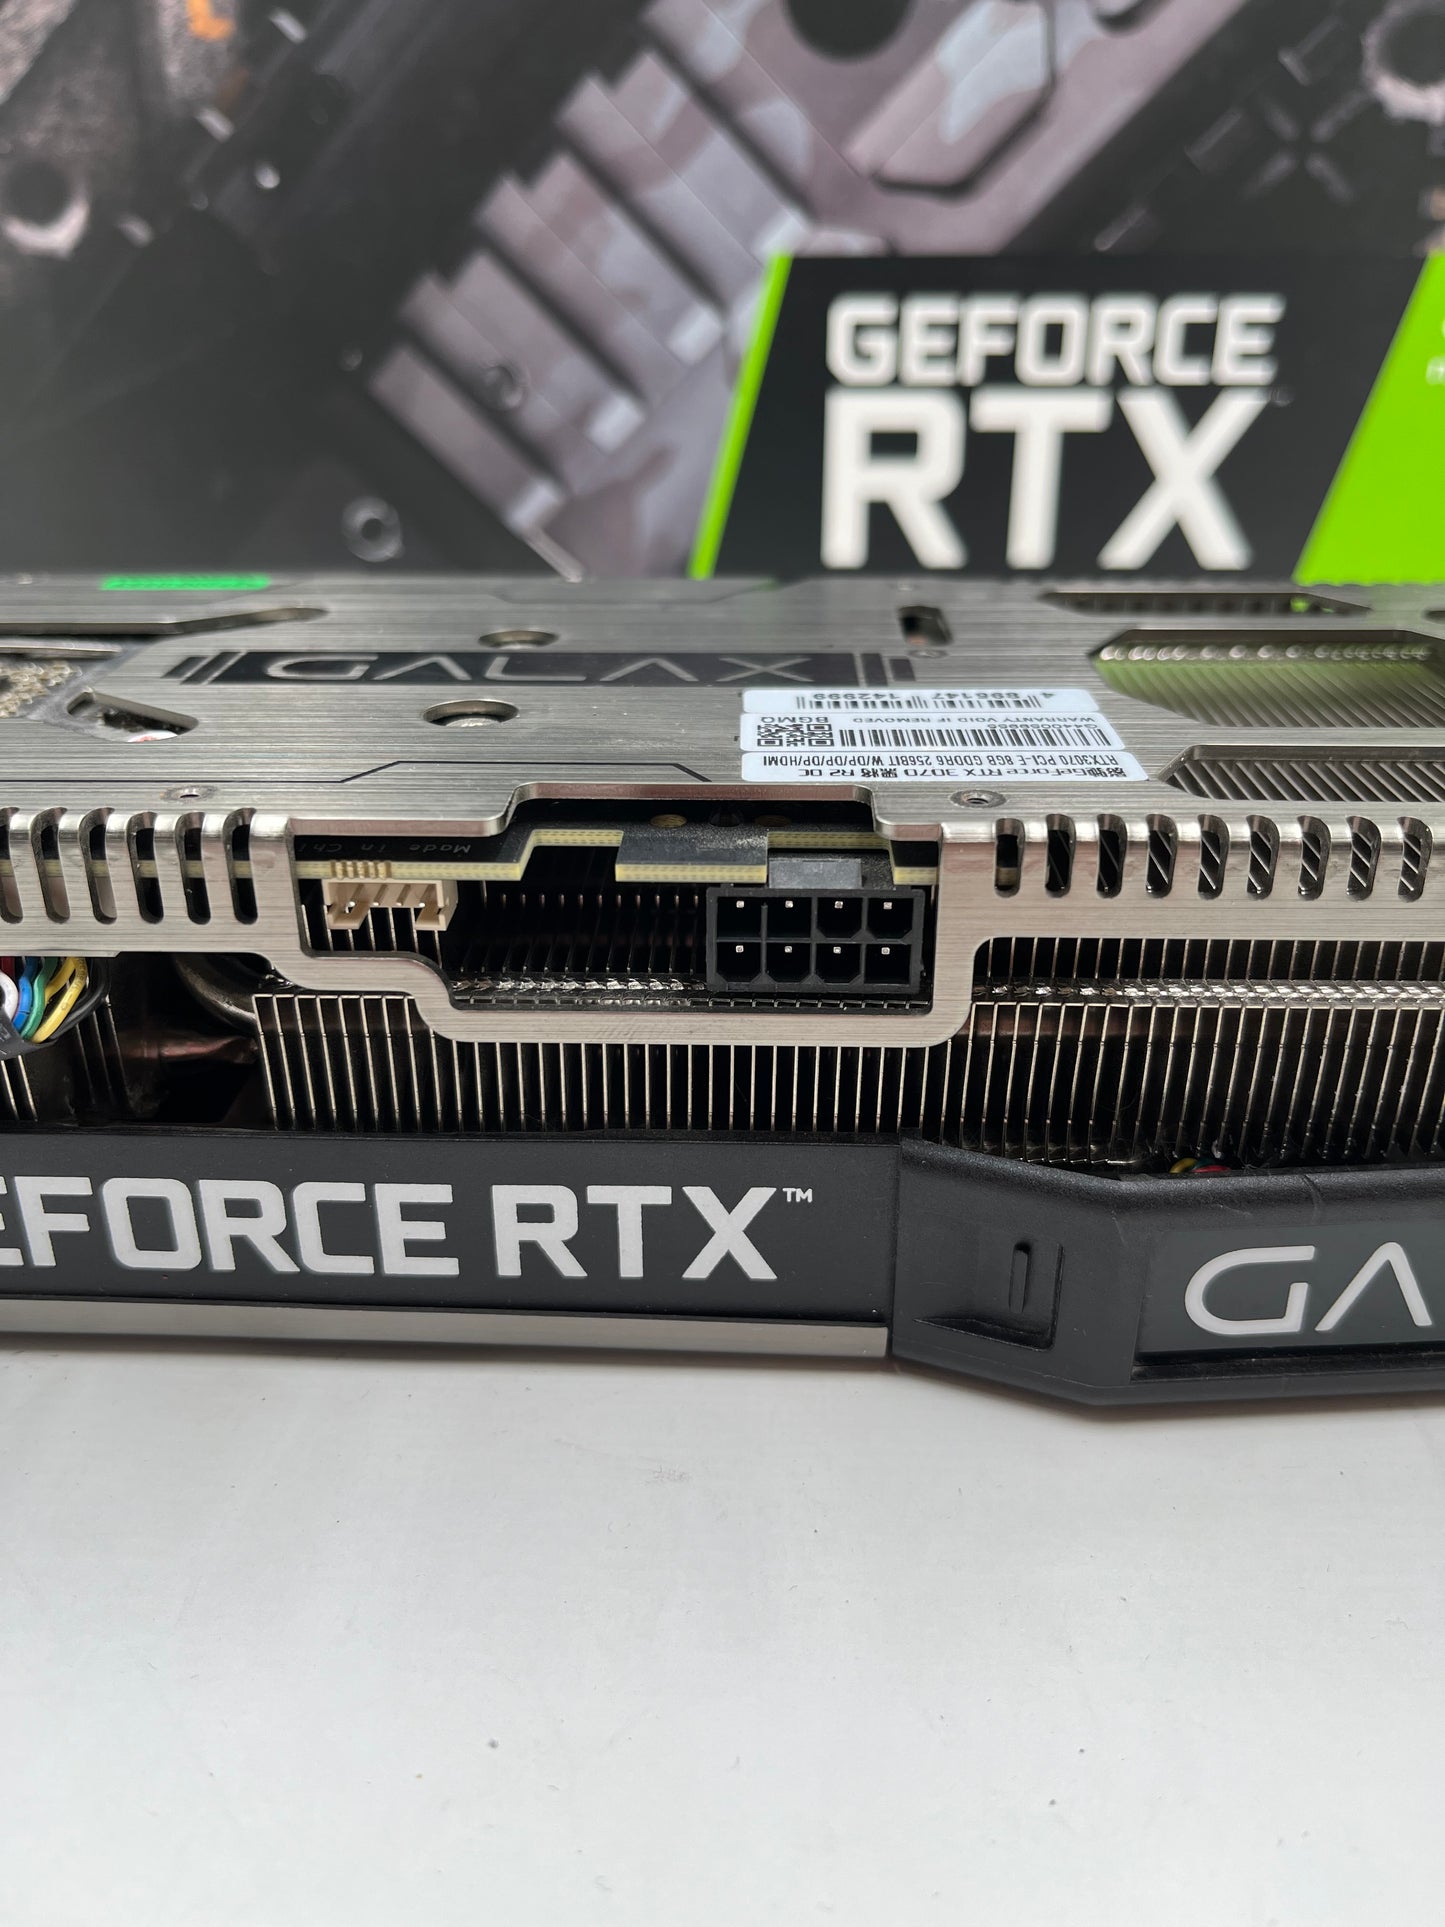 Galax Nvidia GeForce RTX 3070 Black GDDR6 - Was £319.99 - A